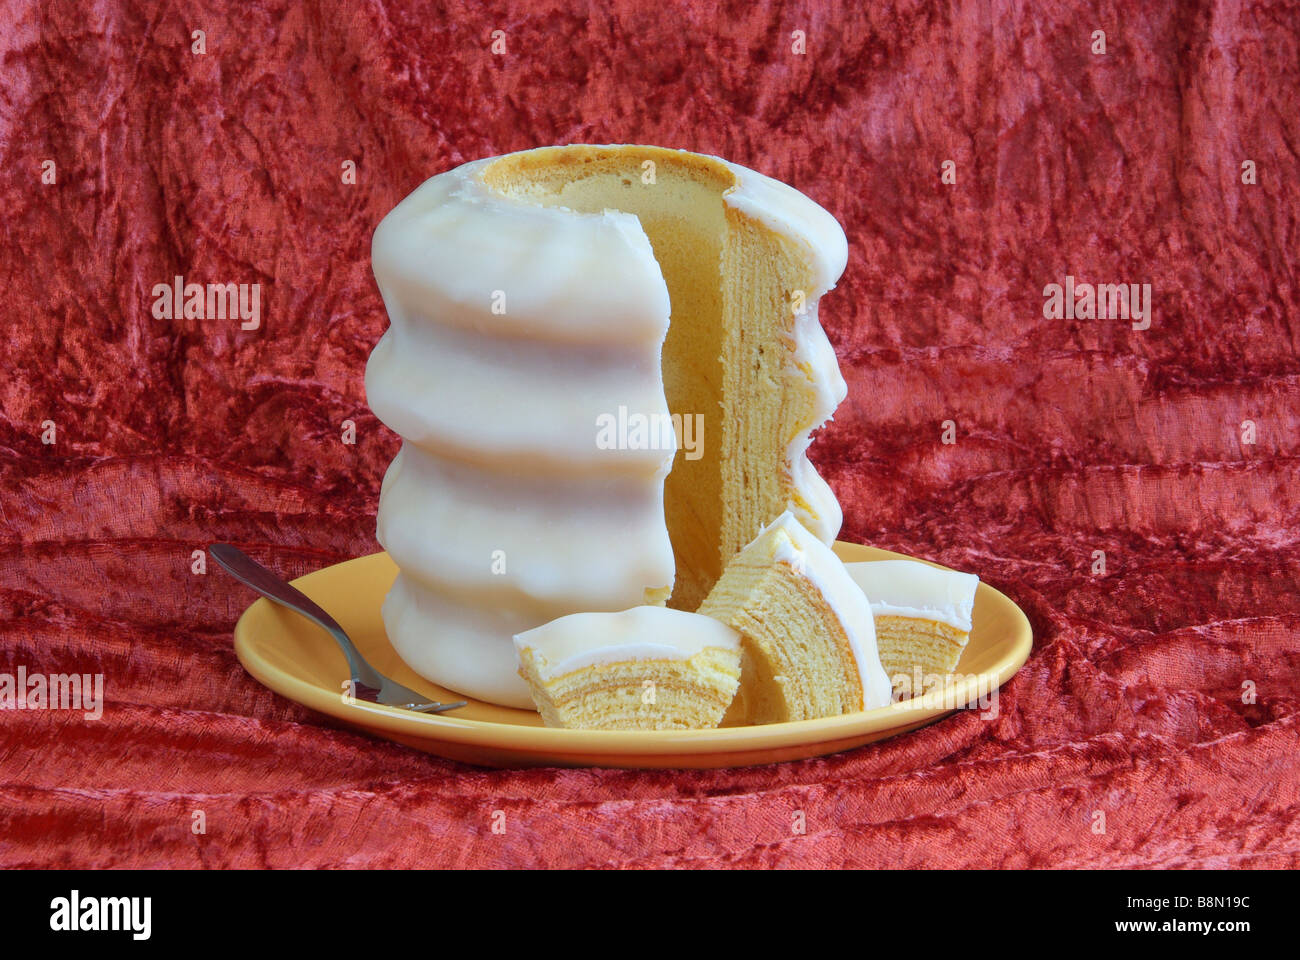 Baumkuchen King of Cakes 04 Stock Photo